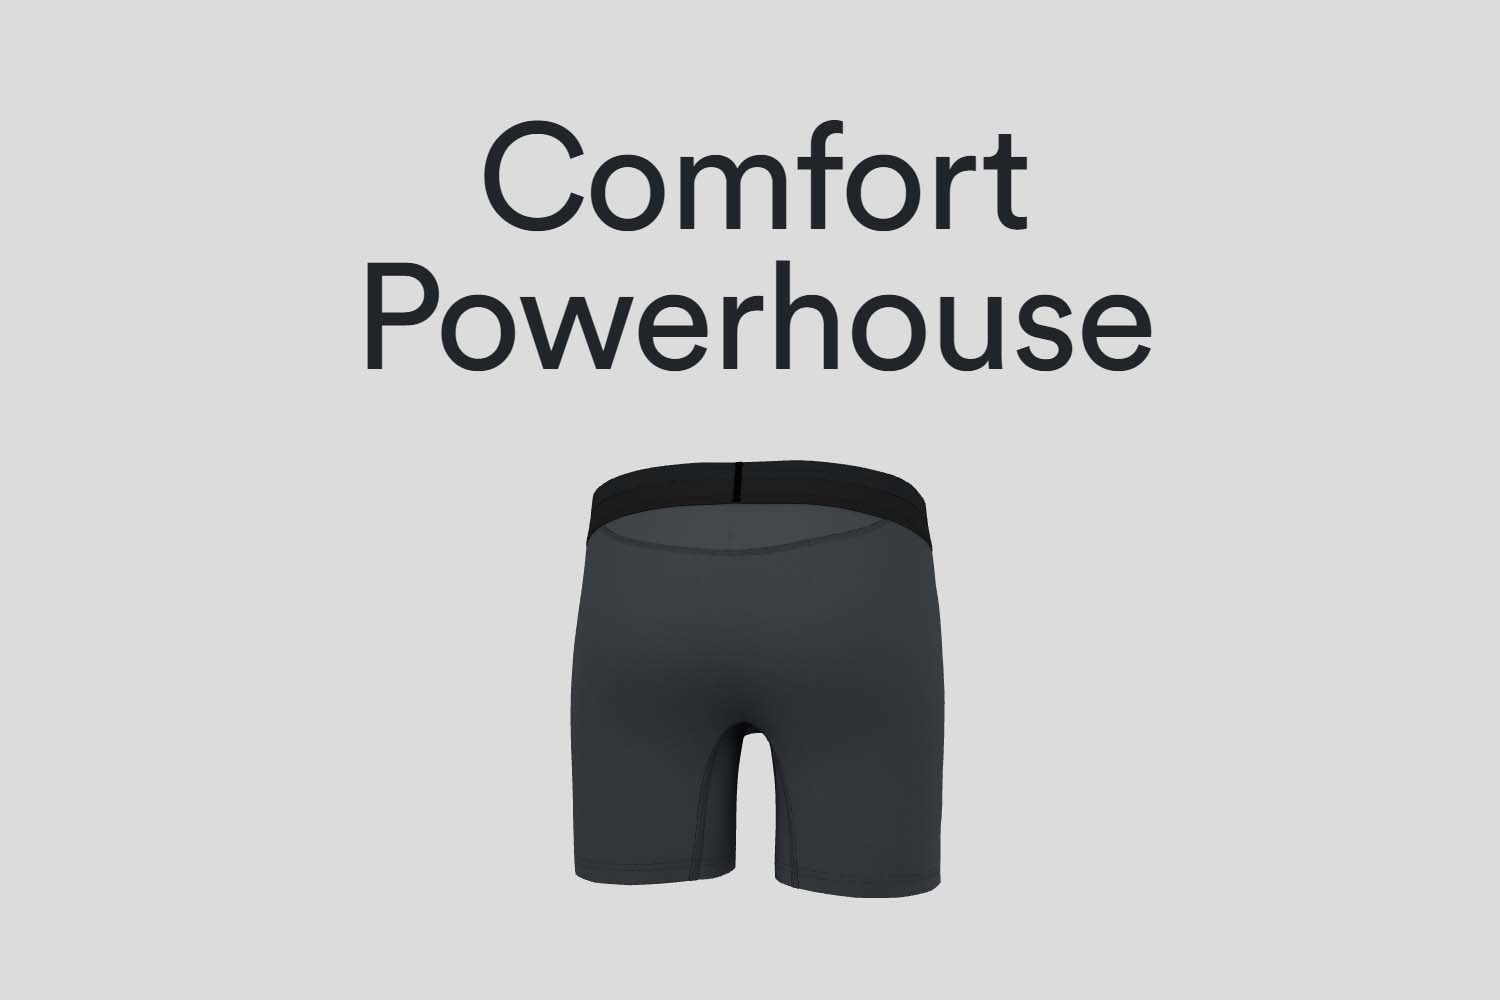  SHEATH 2.1 Men's Underwear Trunks with Dual Pouch Fly